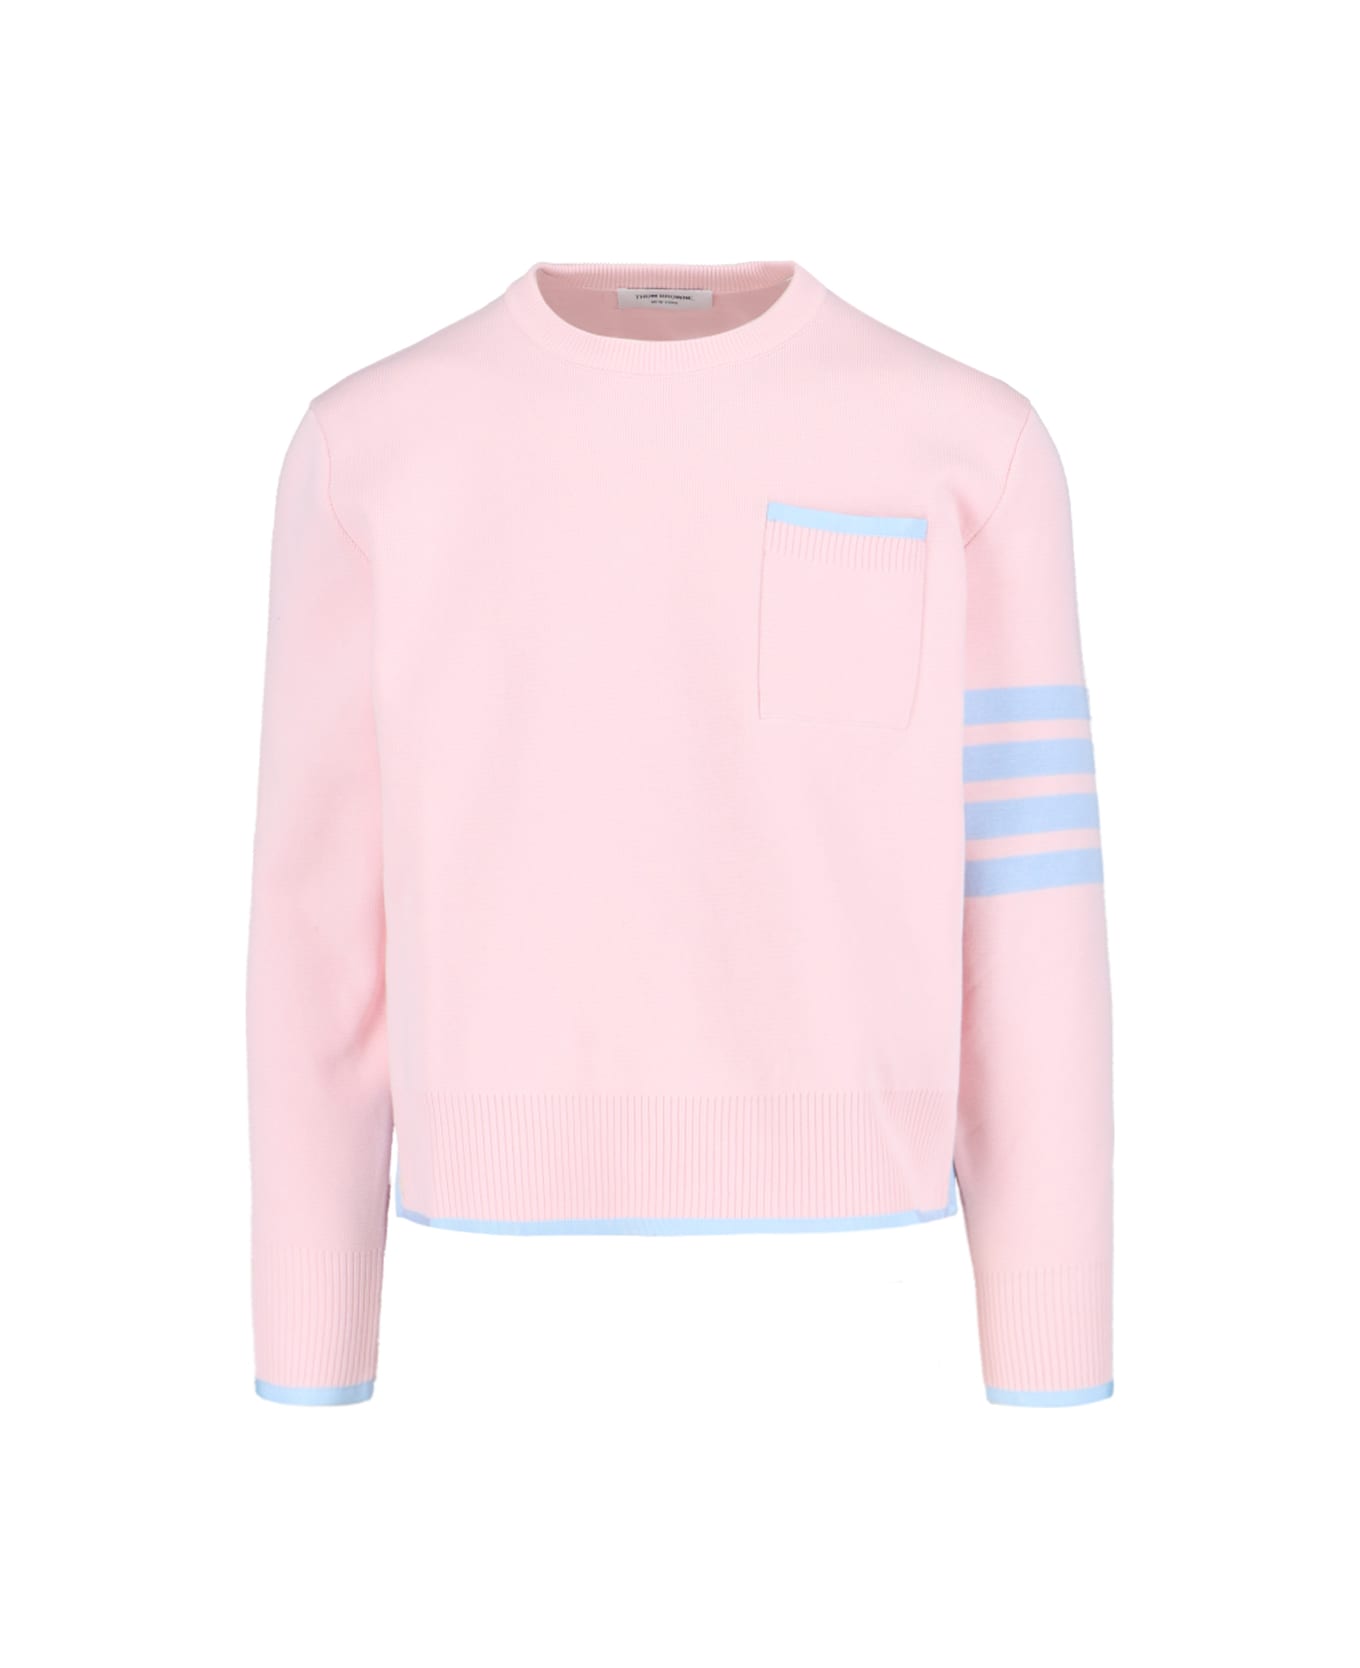 Thom Browne '4-bar' Sweater - Pink